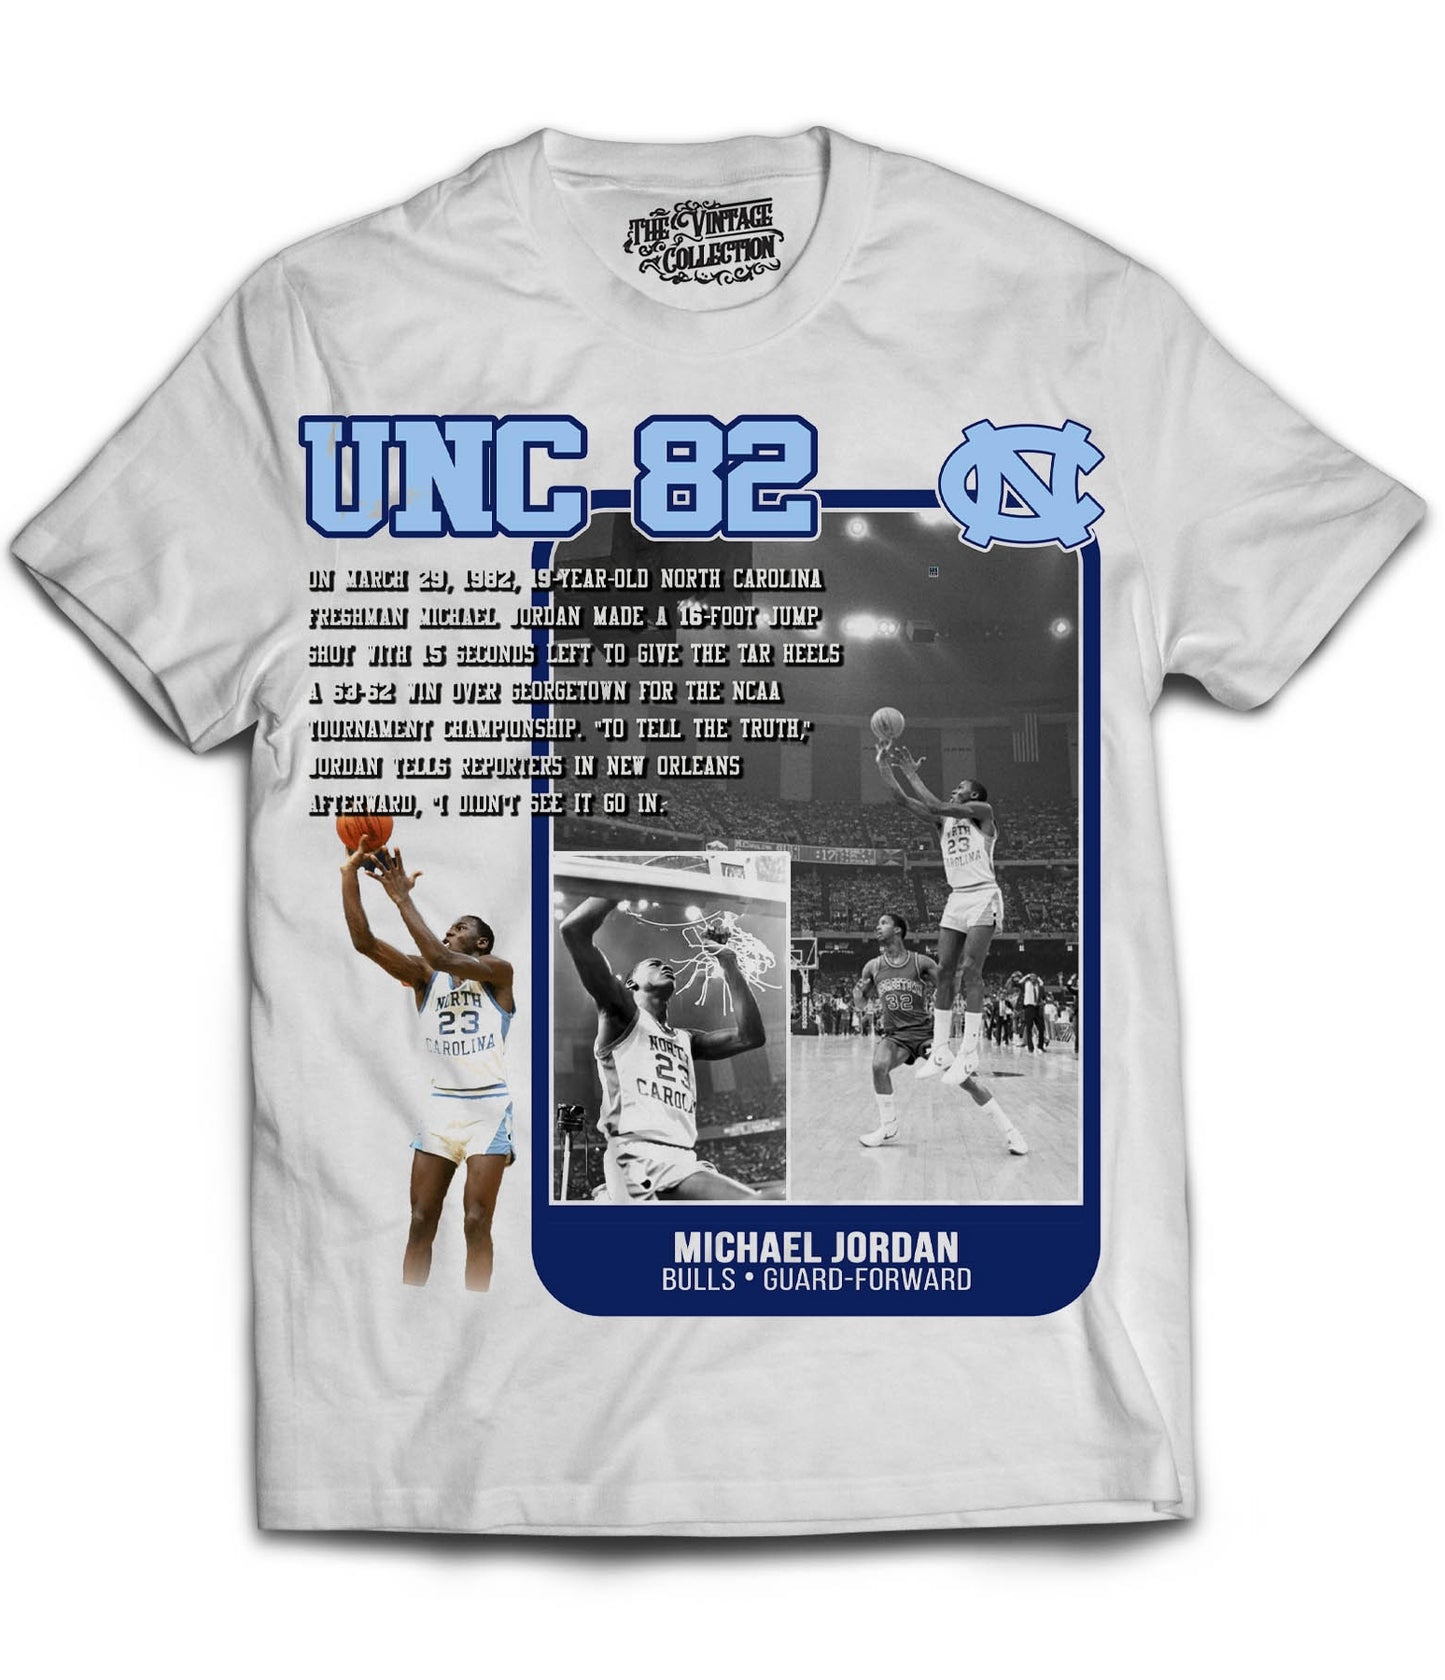 UNC 82 GOAT Tribute T-Shirt (WHITE)